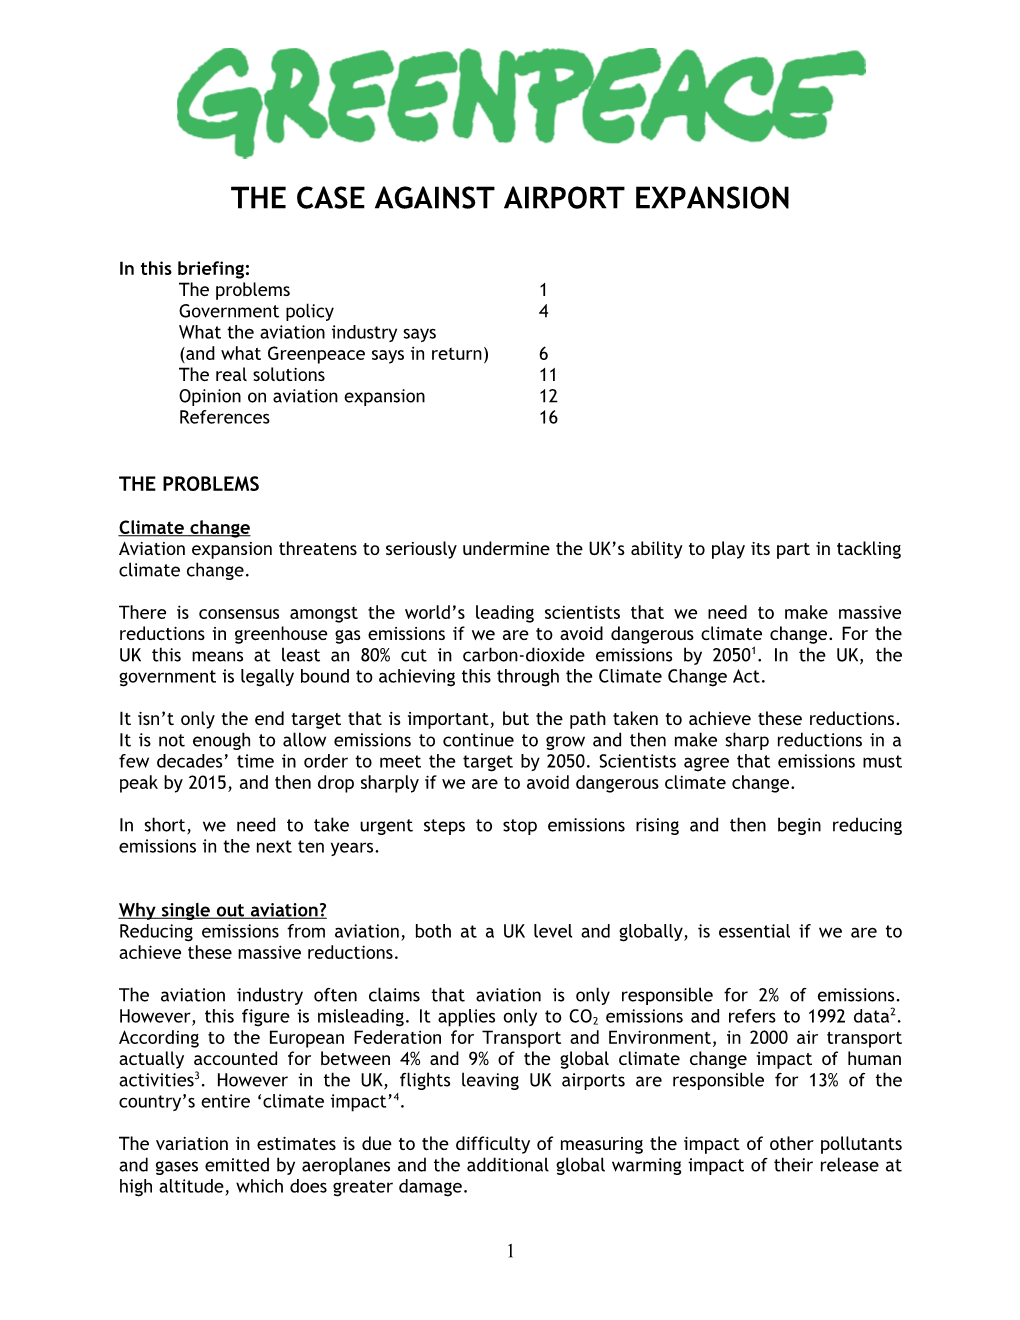 The Case Against Heathrow Expansion